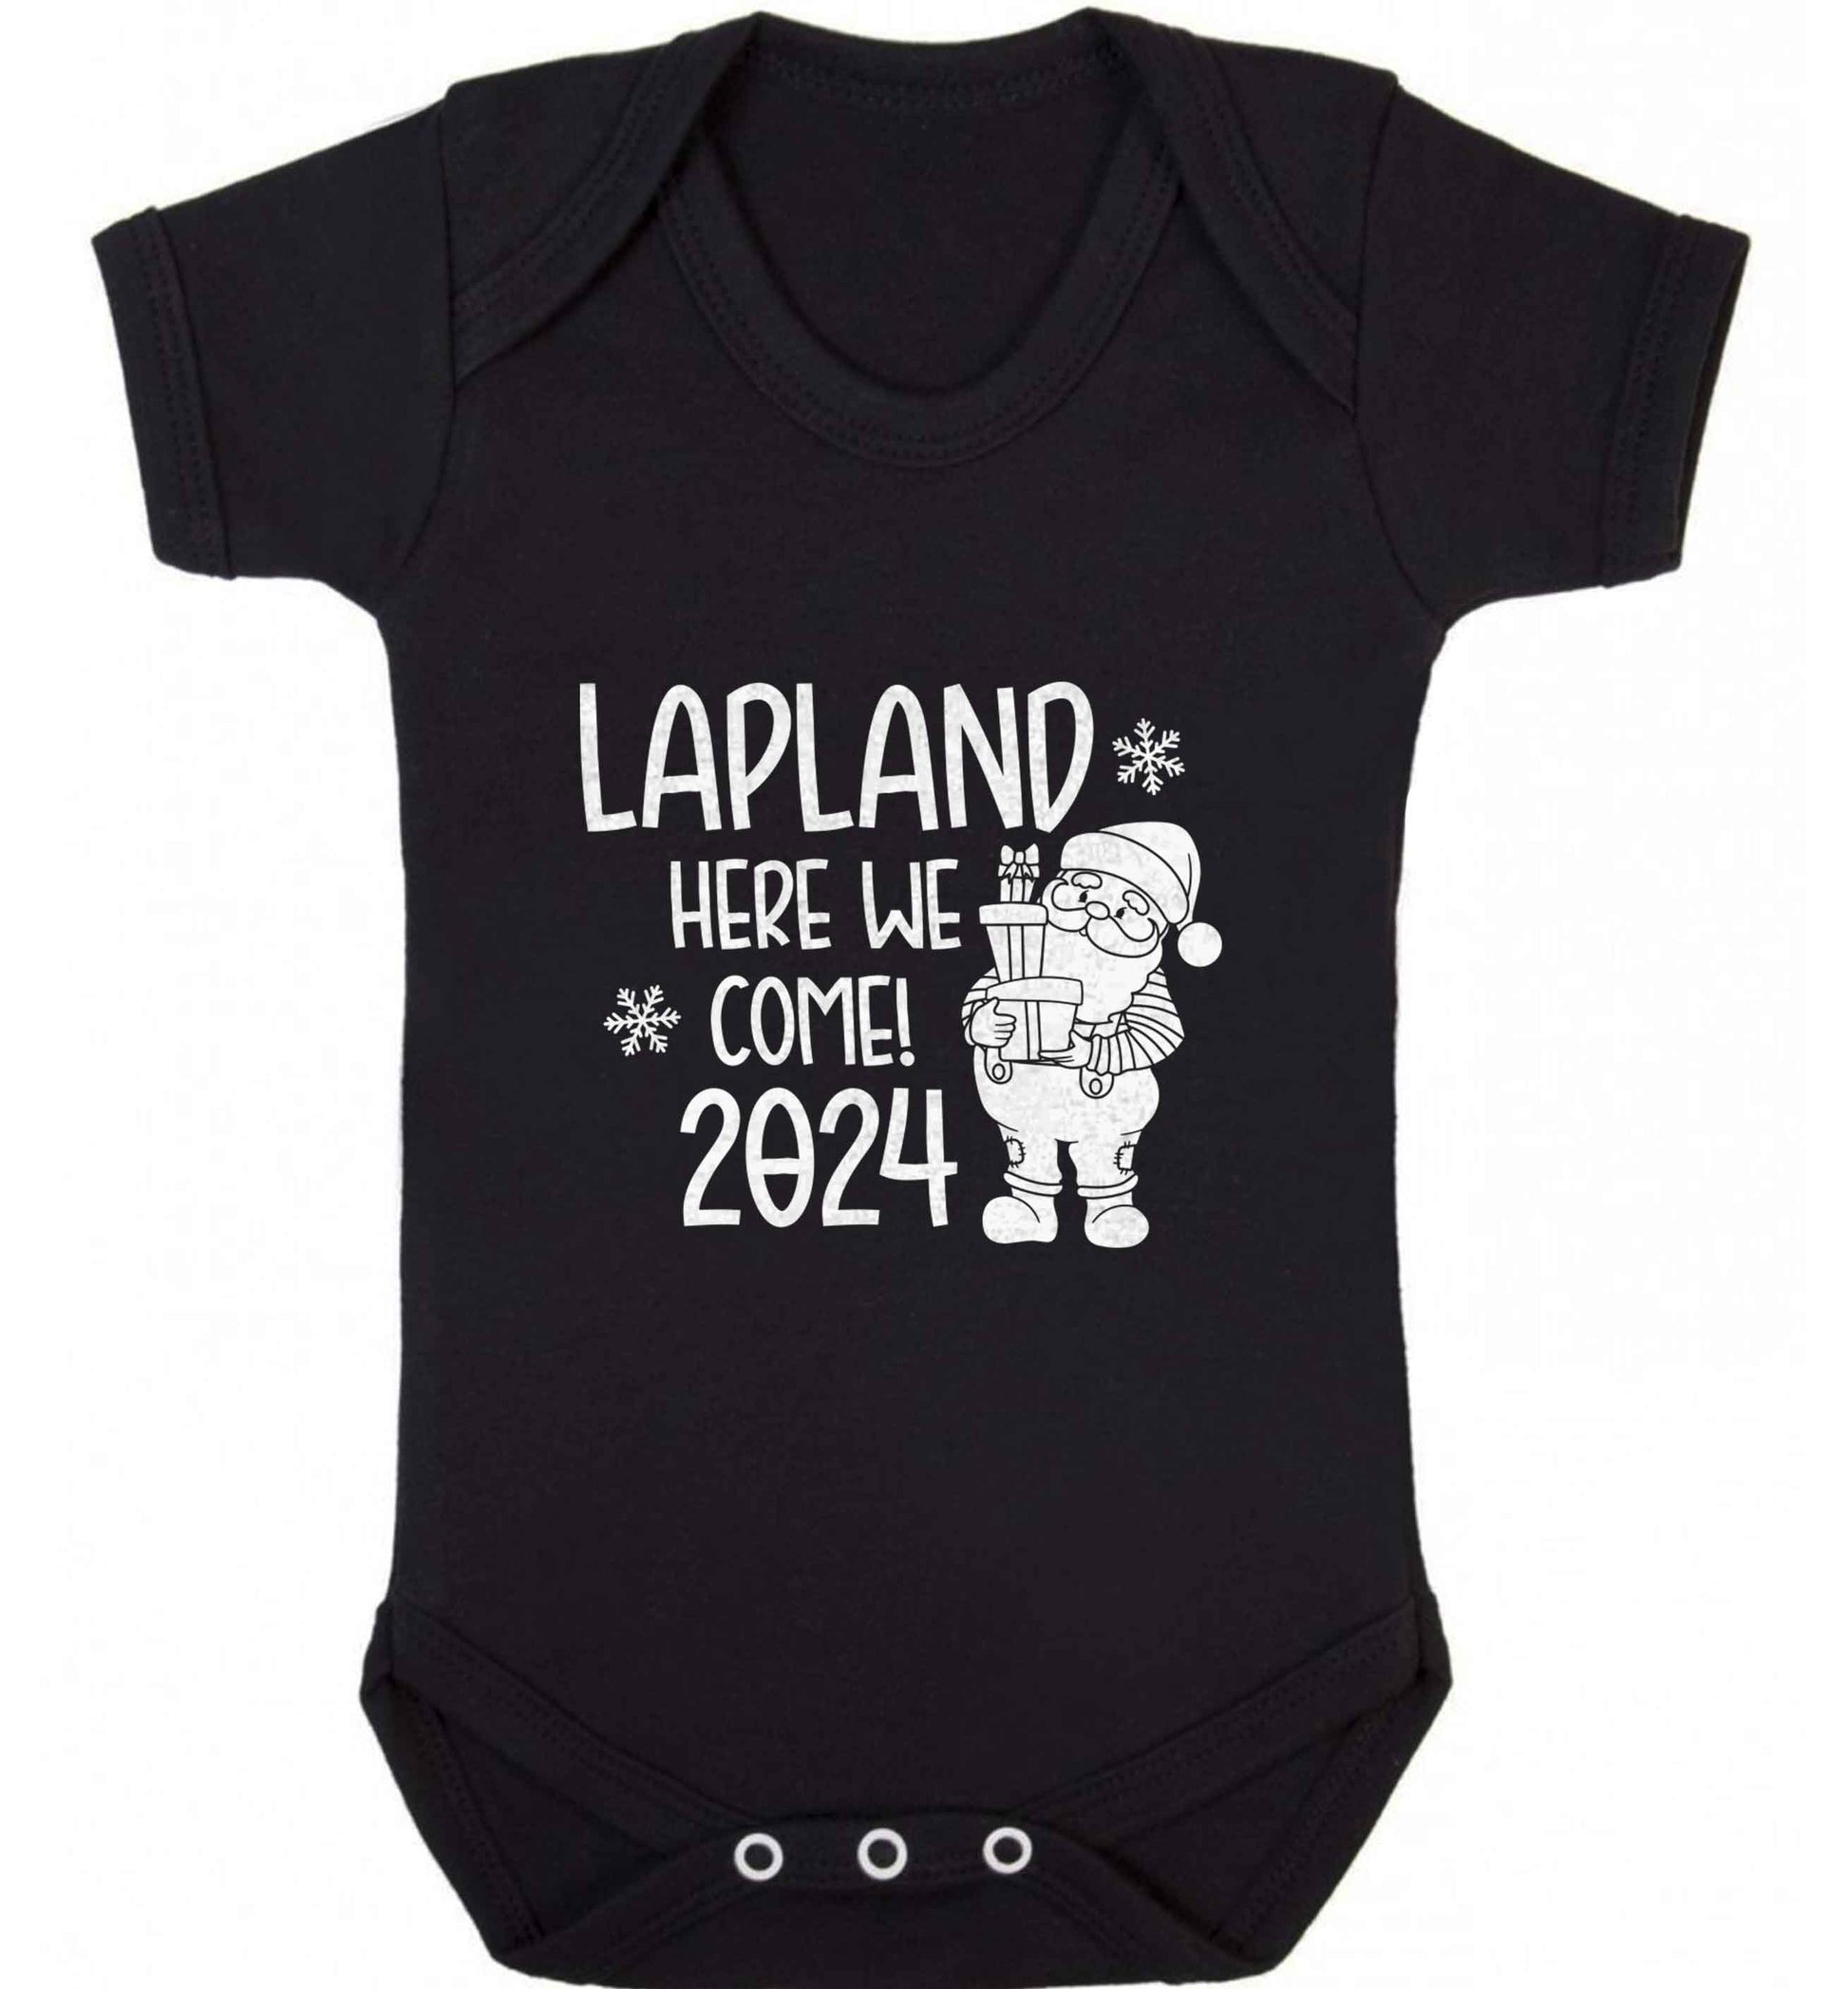 Lapland here we come baby vest black 18-24 months